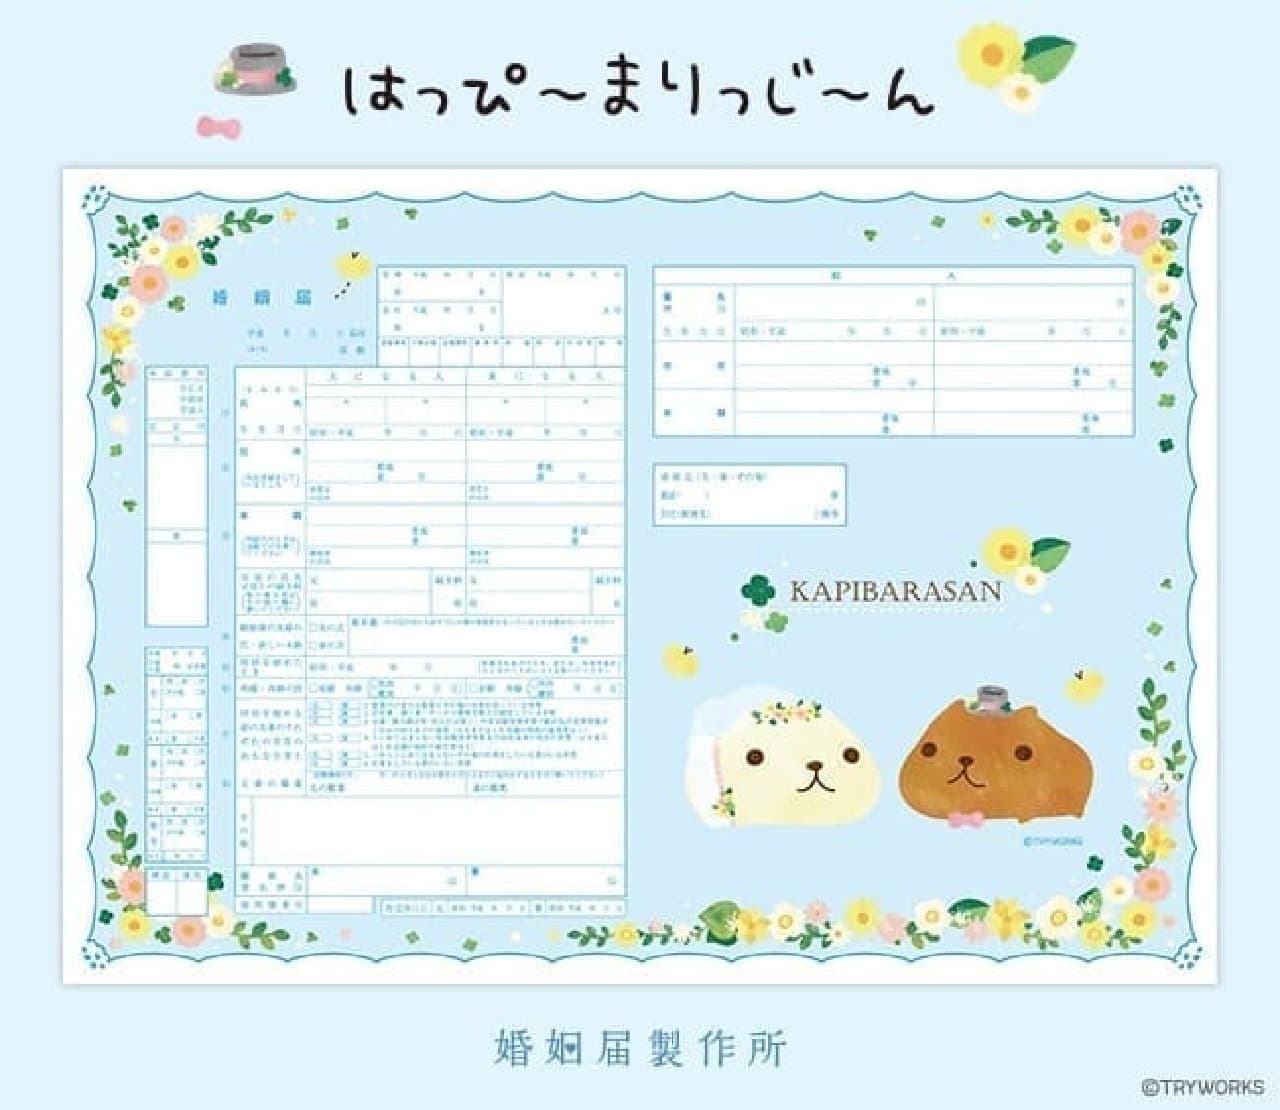 Marriage registration designed by "Kapibara-san"